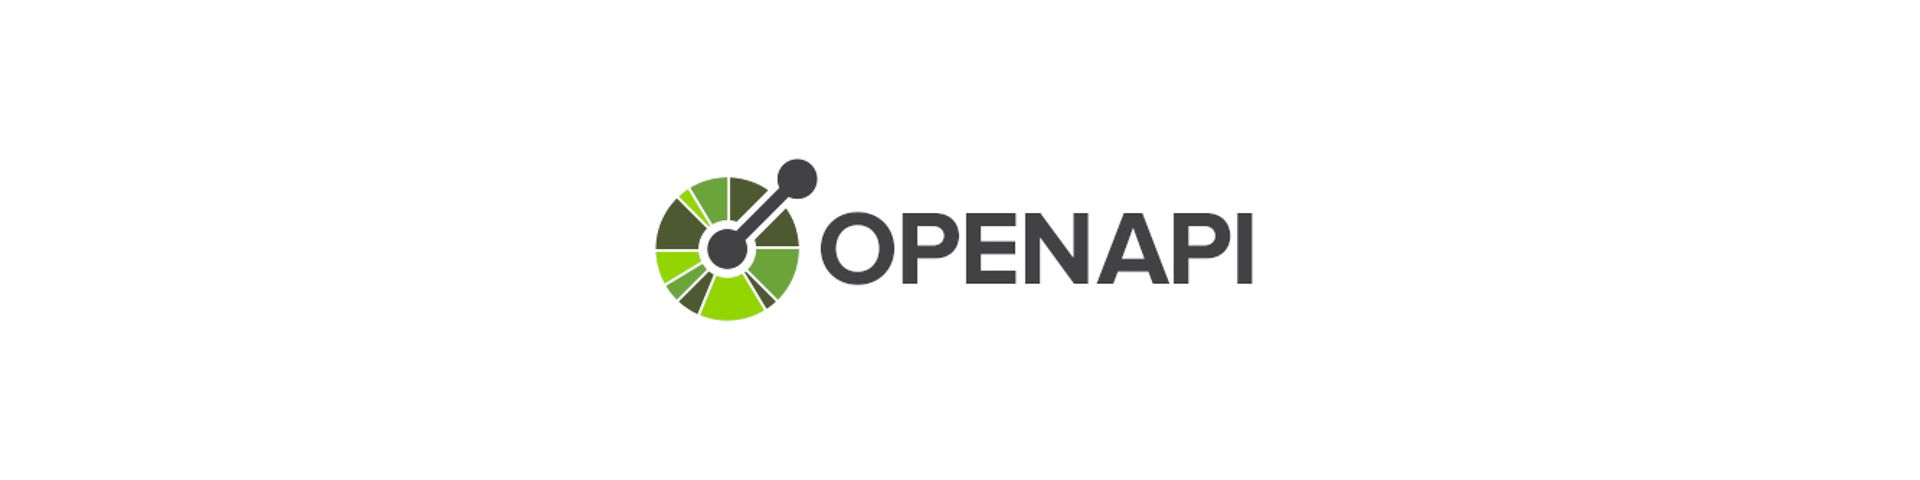 OpenAPI-Logo